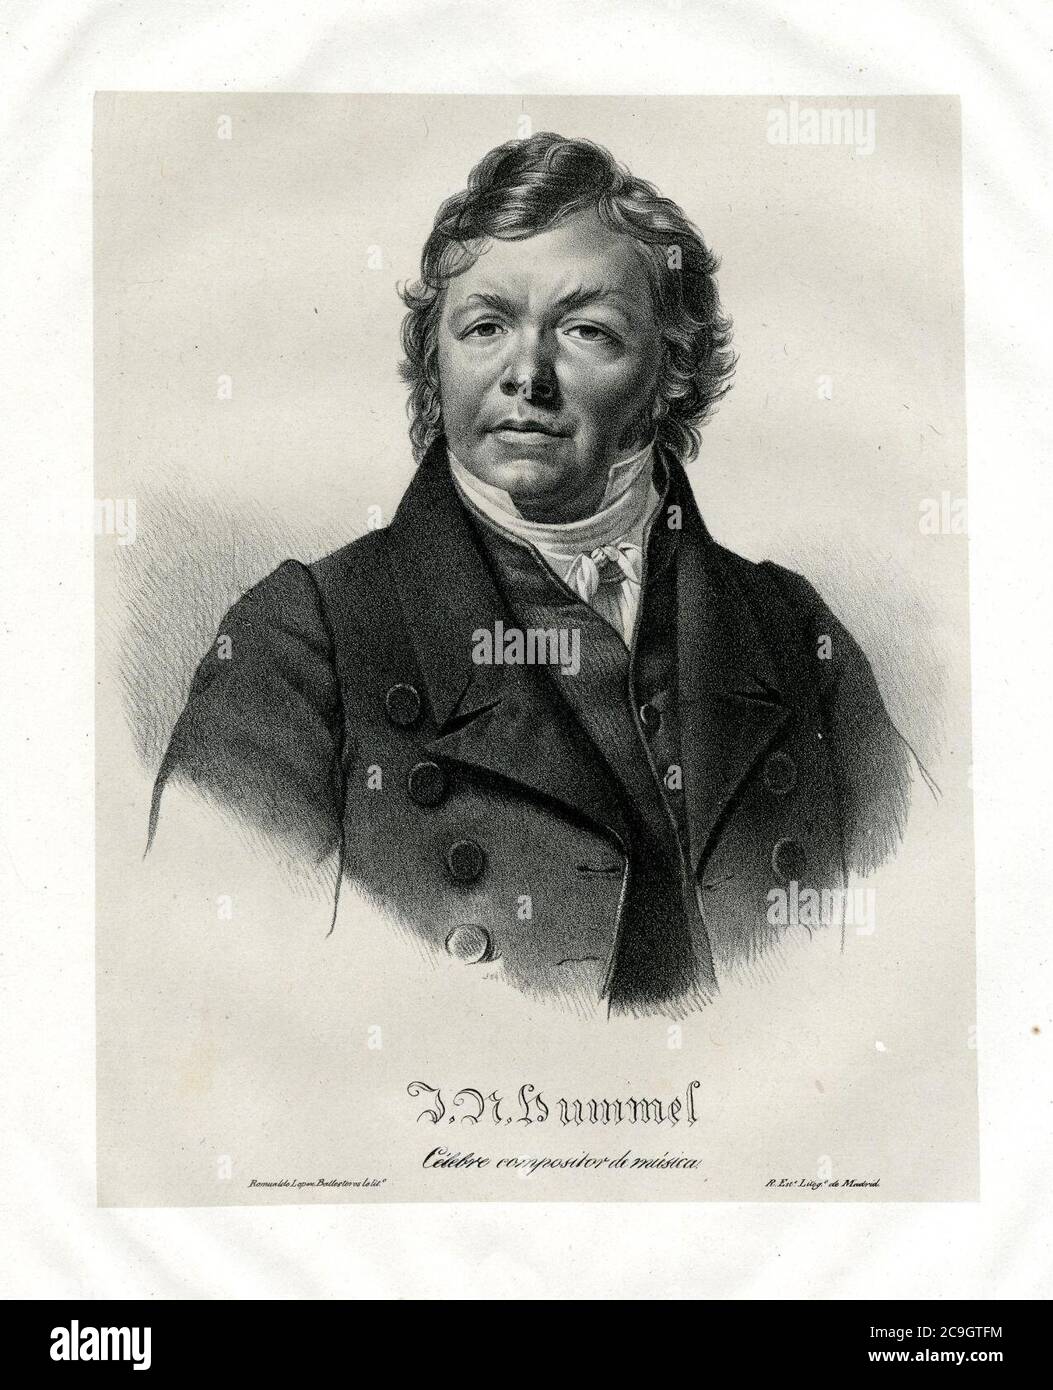 J. N. Hummel - Célébre compositor de música (BM 1869,0410.944). Stockfoto